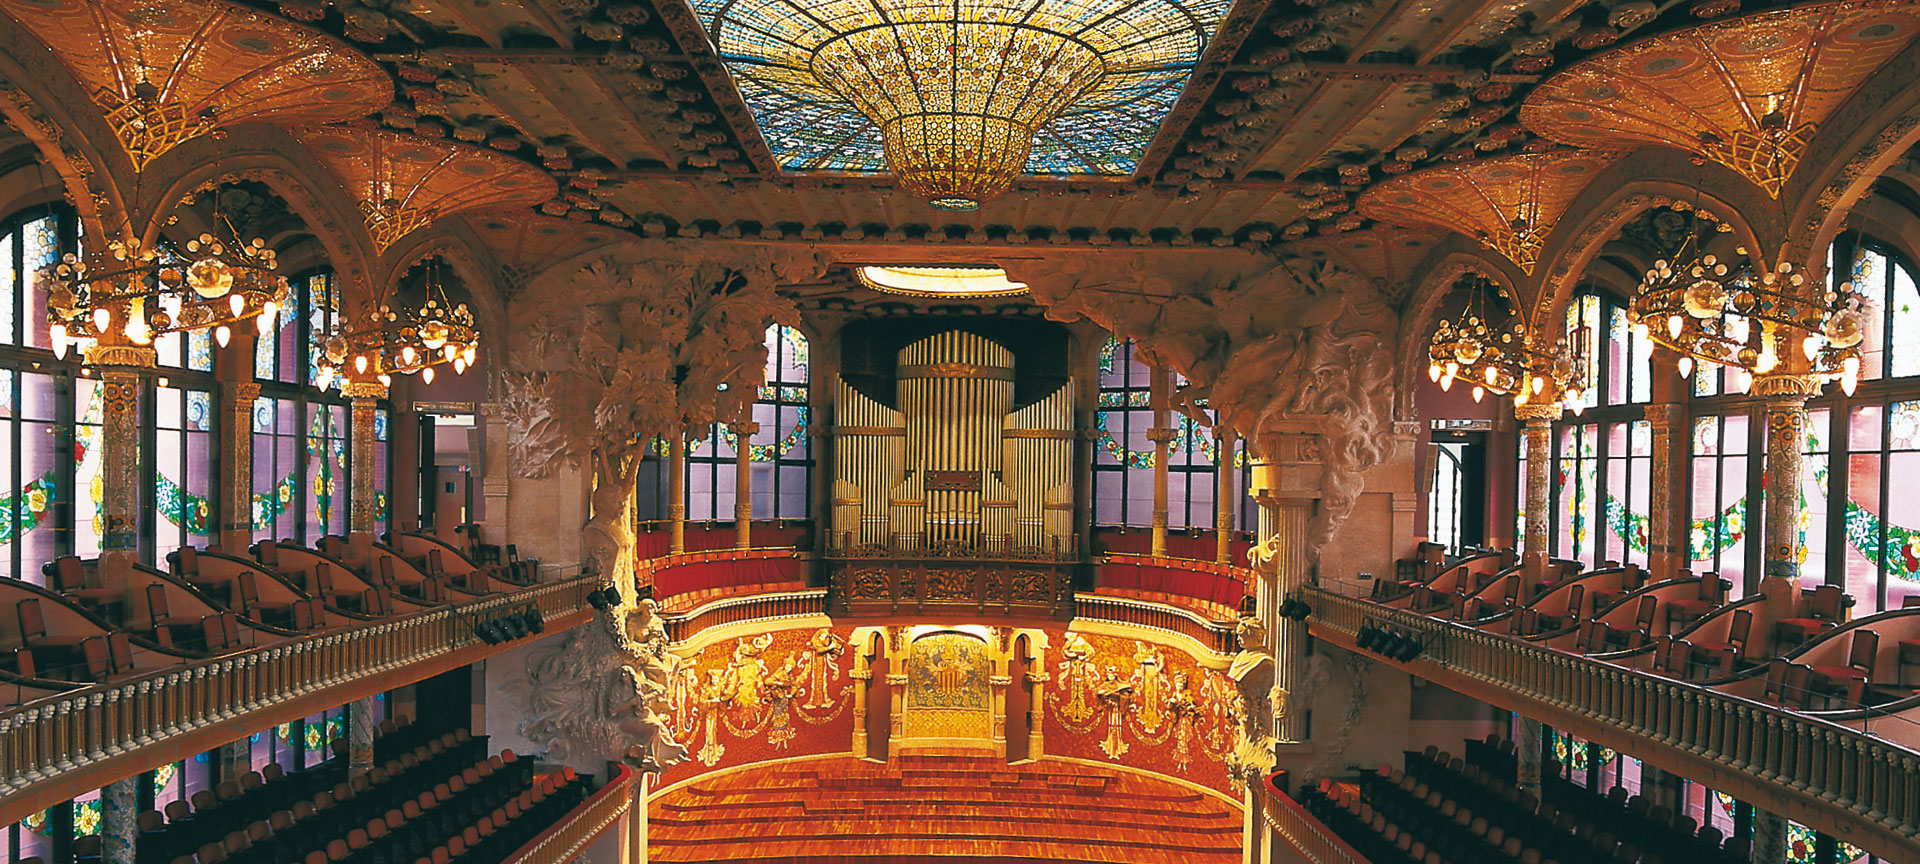 Сайт дворец музыки. Palau de la música Catalana Барселона. Дворец каталонской музыки в Барселоне. Дворец каталонской музыки (Барселона, Испания) — 1908 год.. Палау де ла музика Каталана.